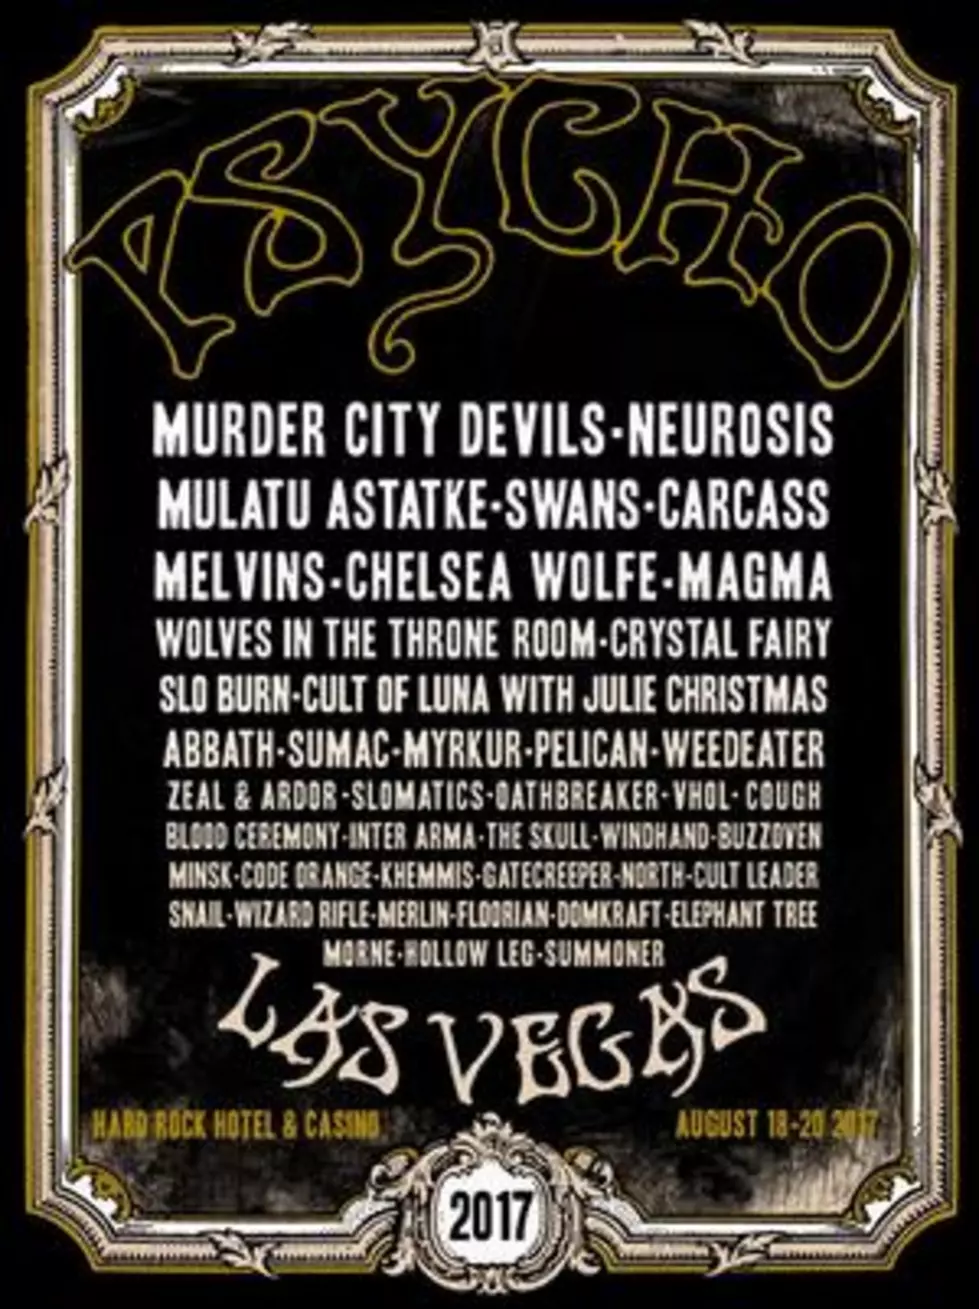 2017 Psycho Las Vegas Lineup Includes Carcass, Abbath, Melvins, Neurosis + More